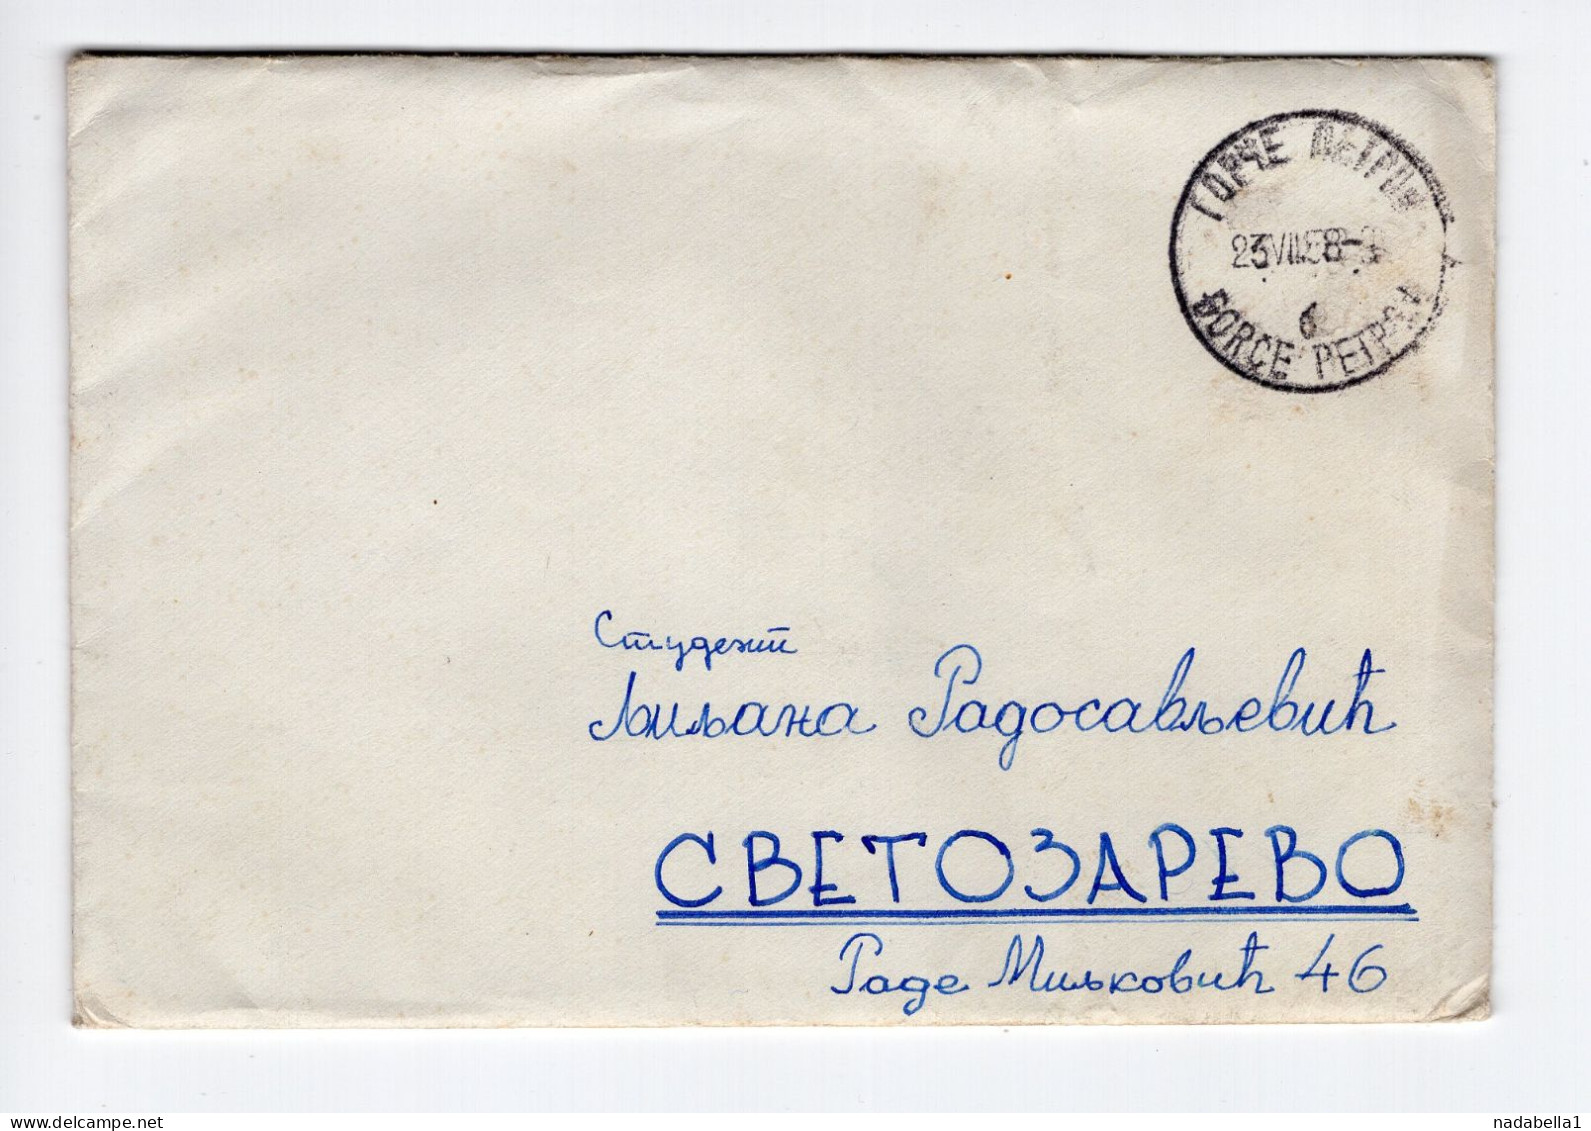 1958. YUGOSLAVIA,MACEDONIA,GORČE PETROV COVER TO SVETOZAREVO,NO STAMP,30 POSTAGE DUE APPLIED - Impuestos